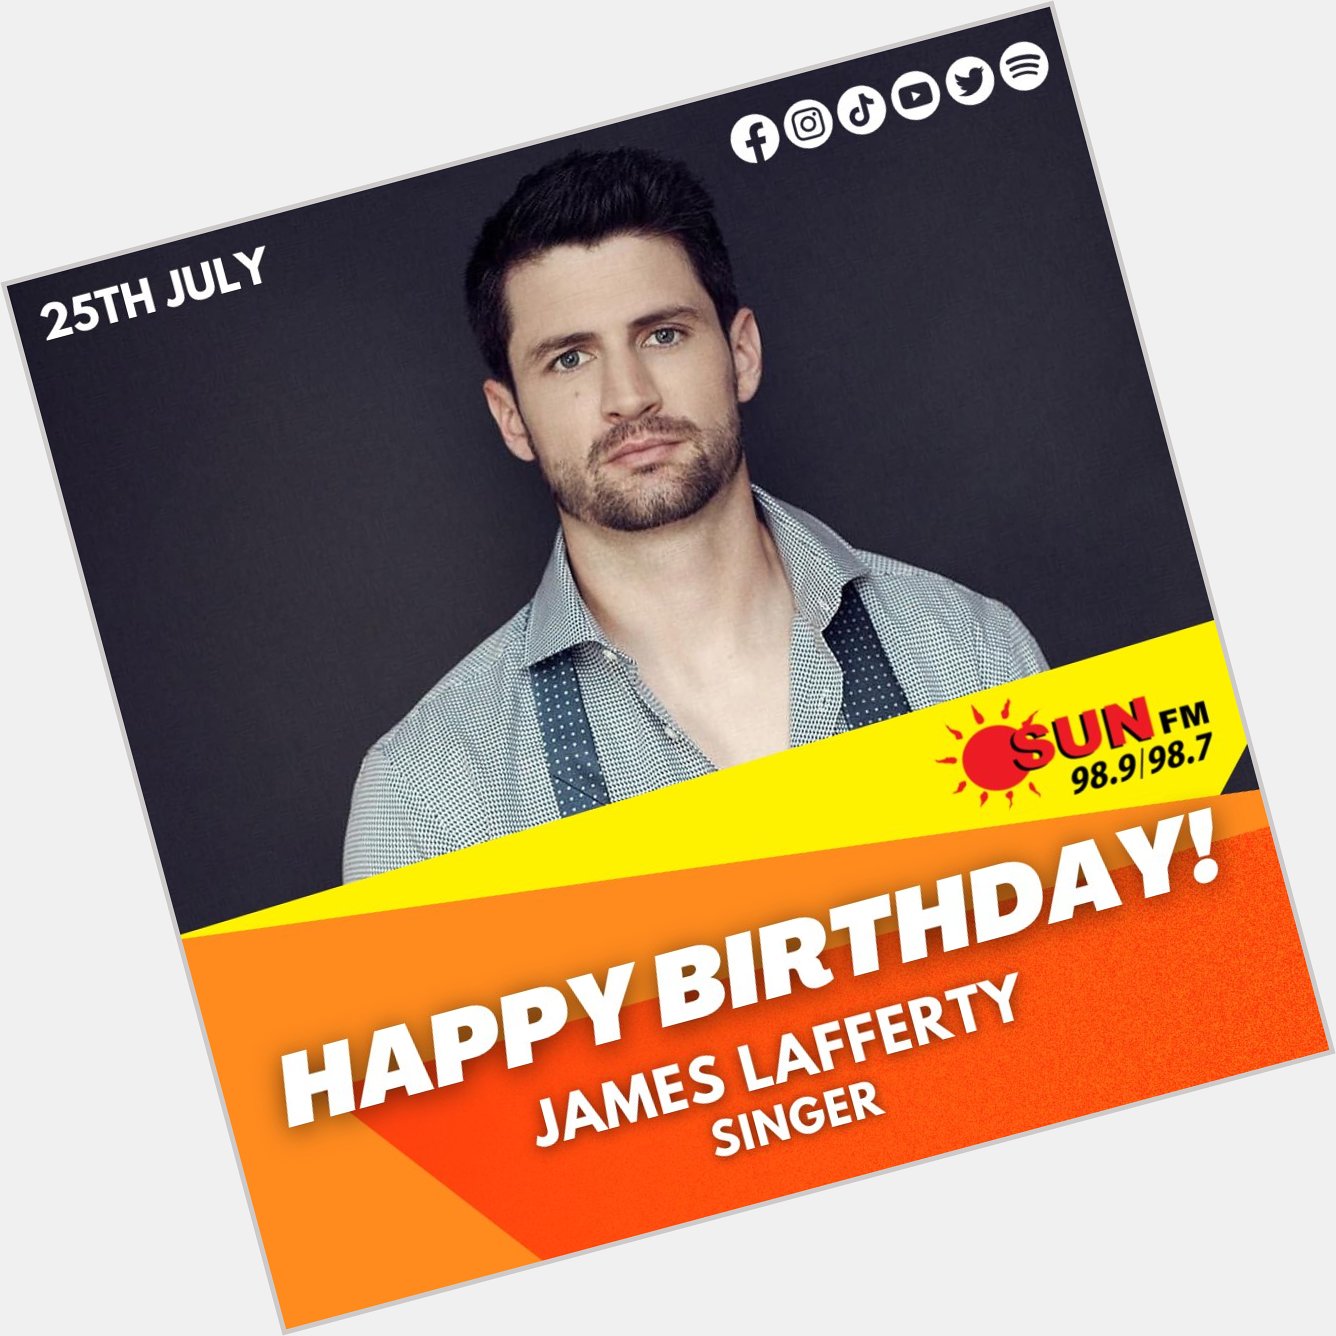 Happy Birthday James Lafferty!  